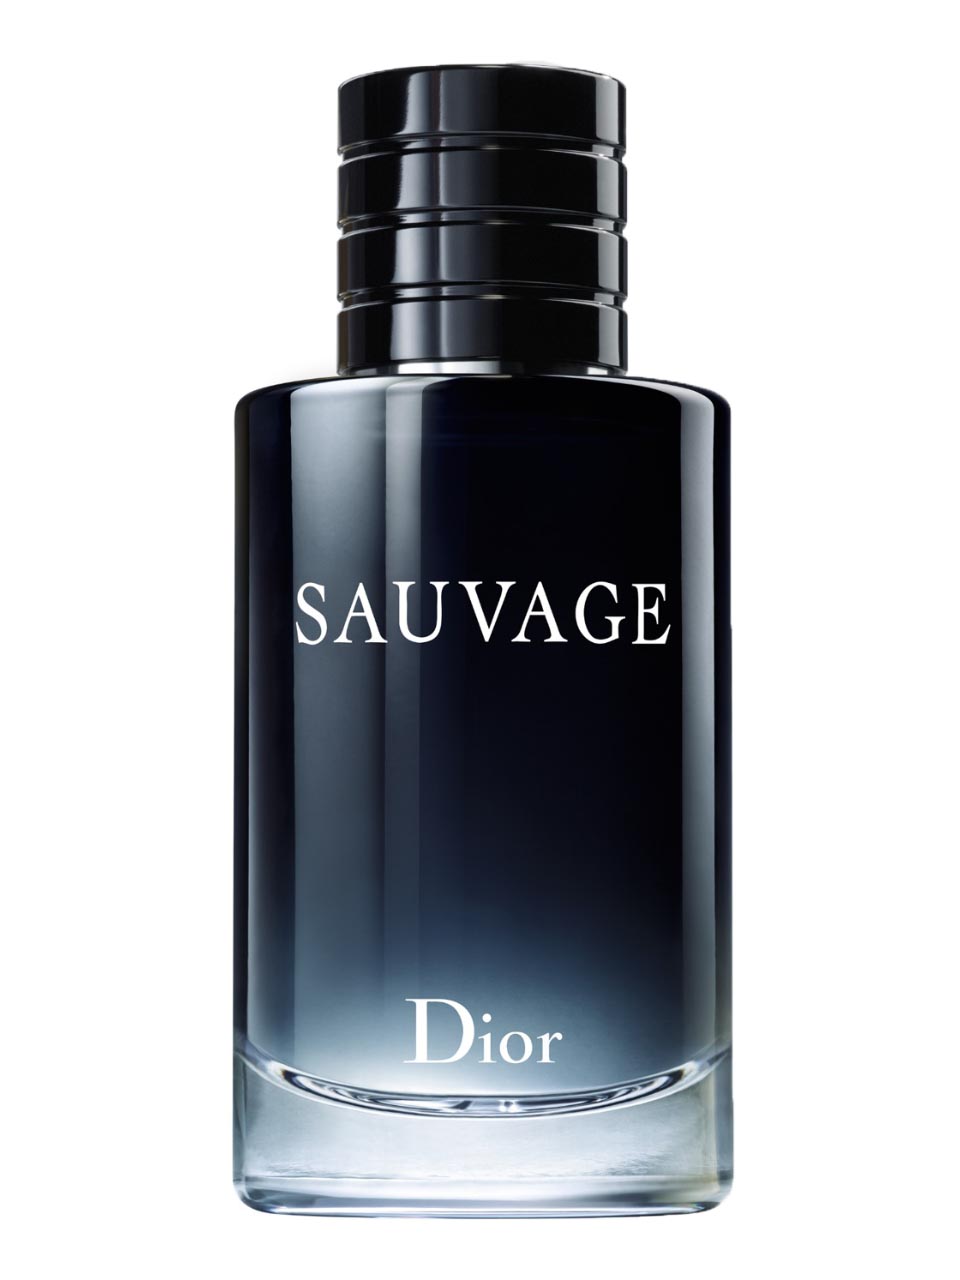 Dior Sauvage Eau de Toilette 200 ml null - onesize - 1